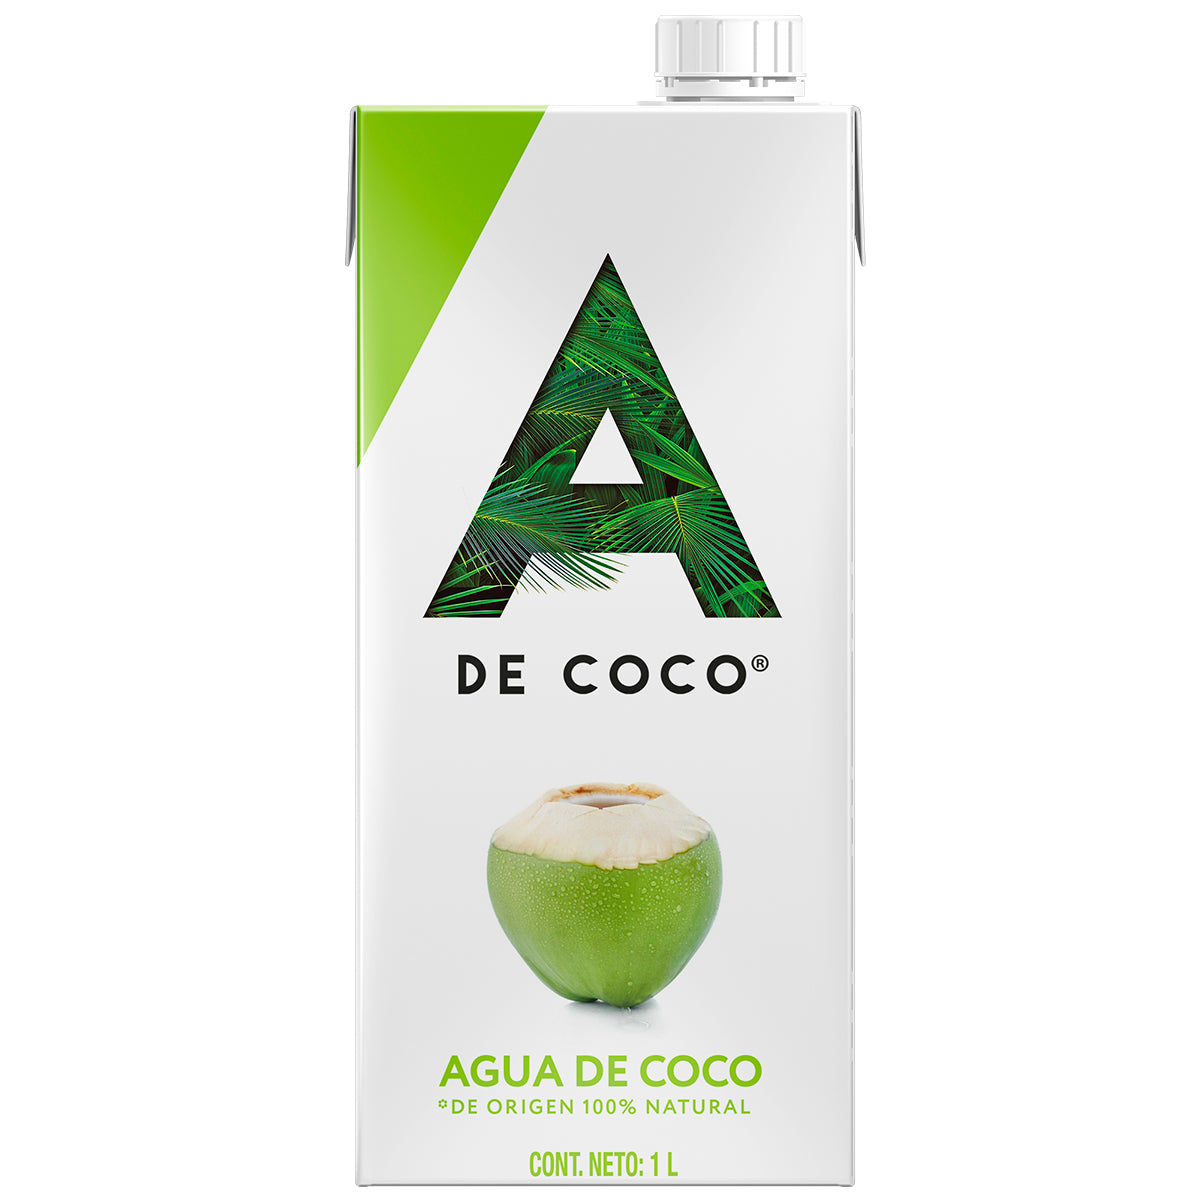 Agua de Coco 1L (A DE COCO)